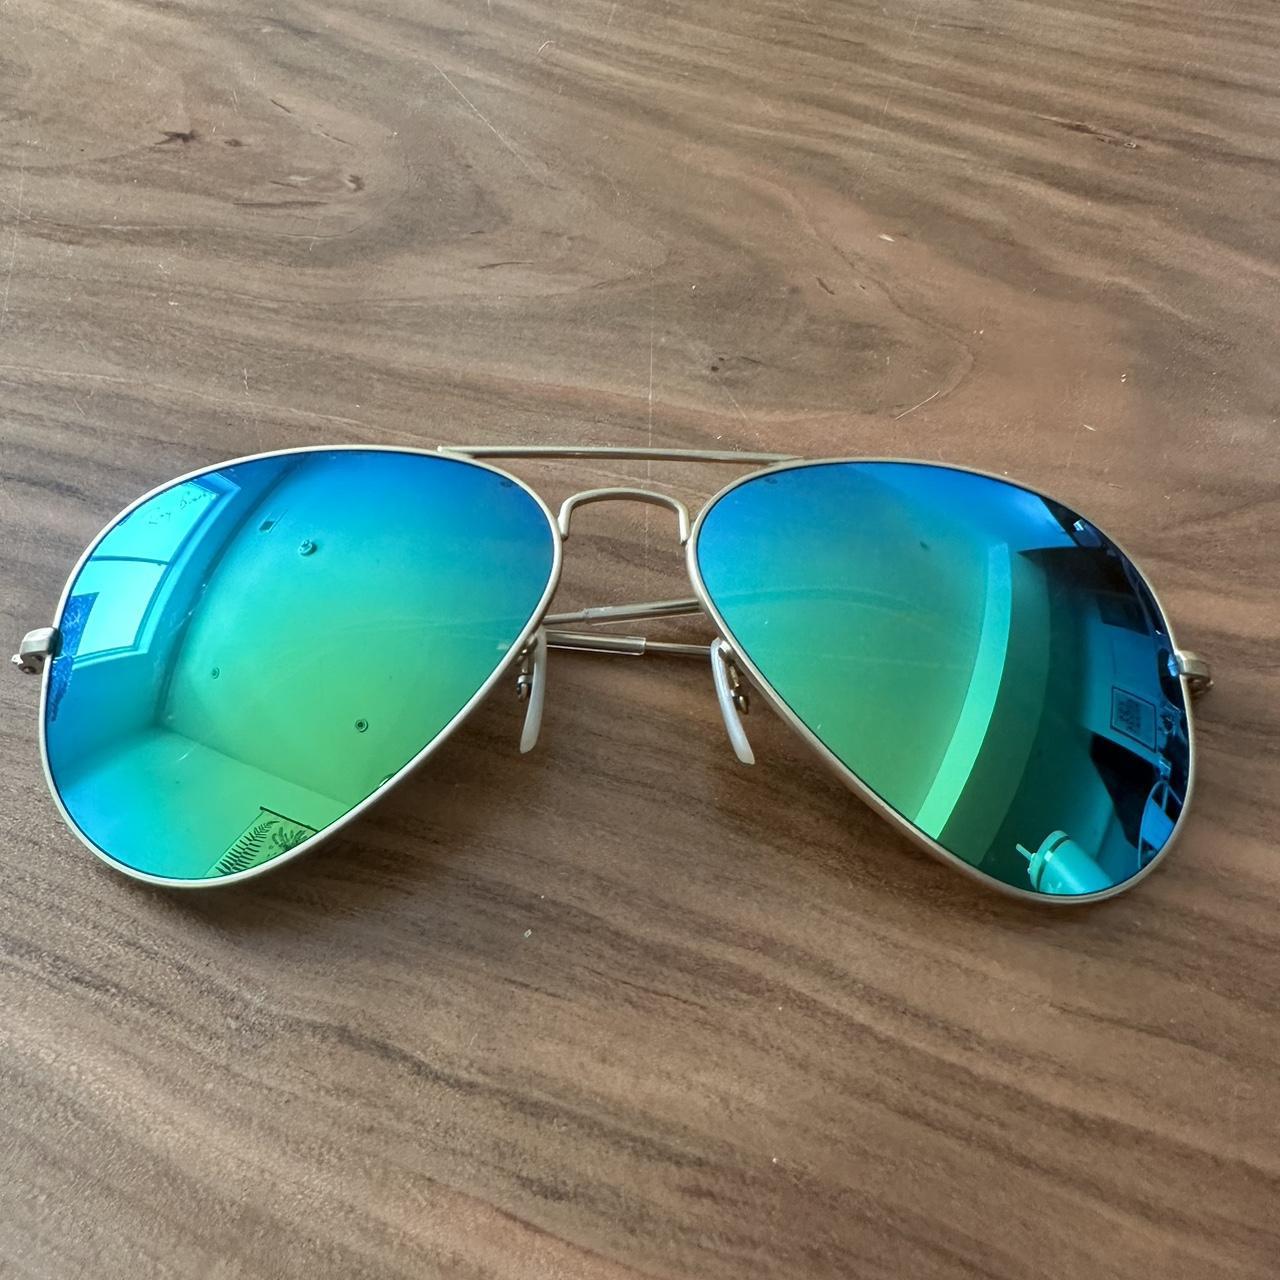 Ray Ban aviator sunglasses Blue reflective lenses, - Depop